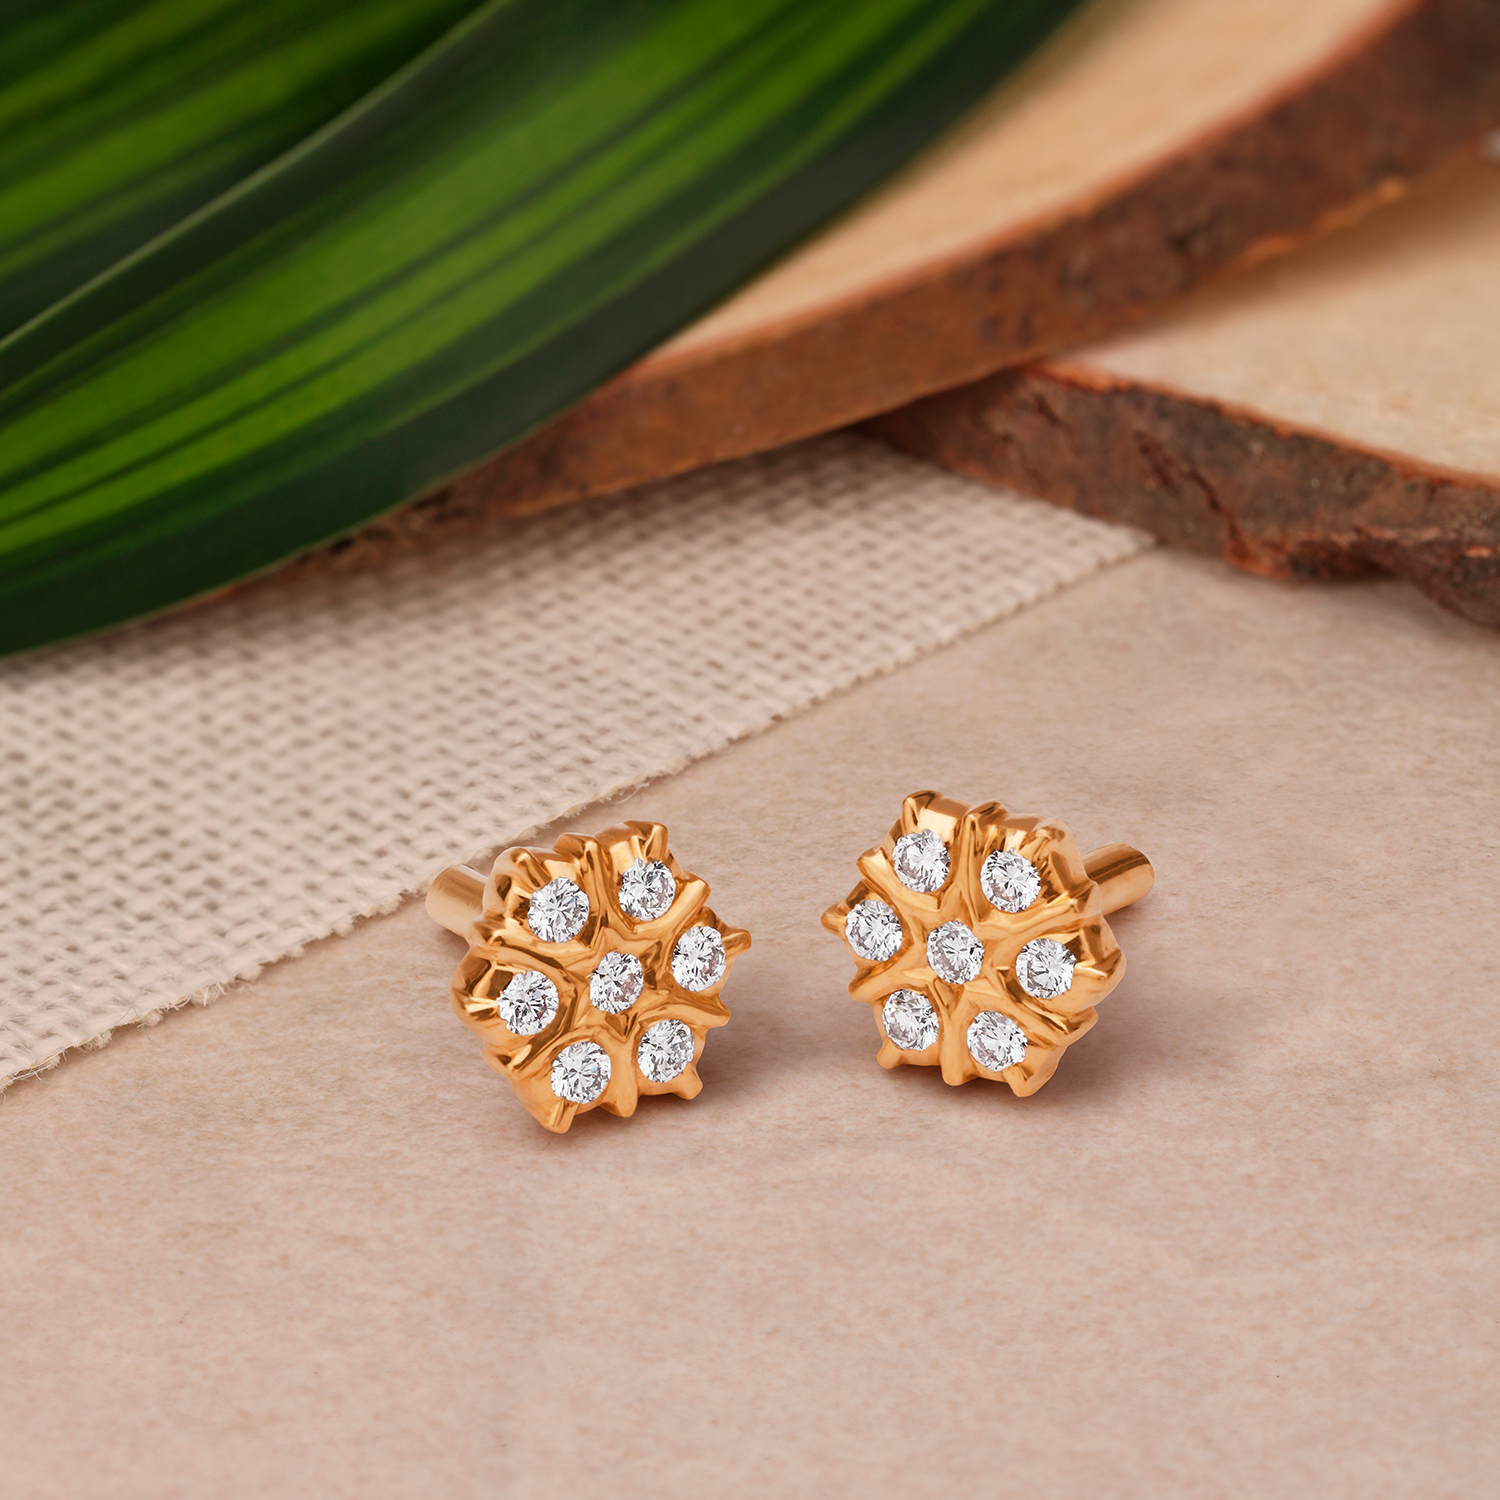 264  Classic Seven Stone Diamond Earring  Real diamond earrings Diamond  earrings design Gold bridal earrings